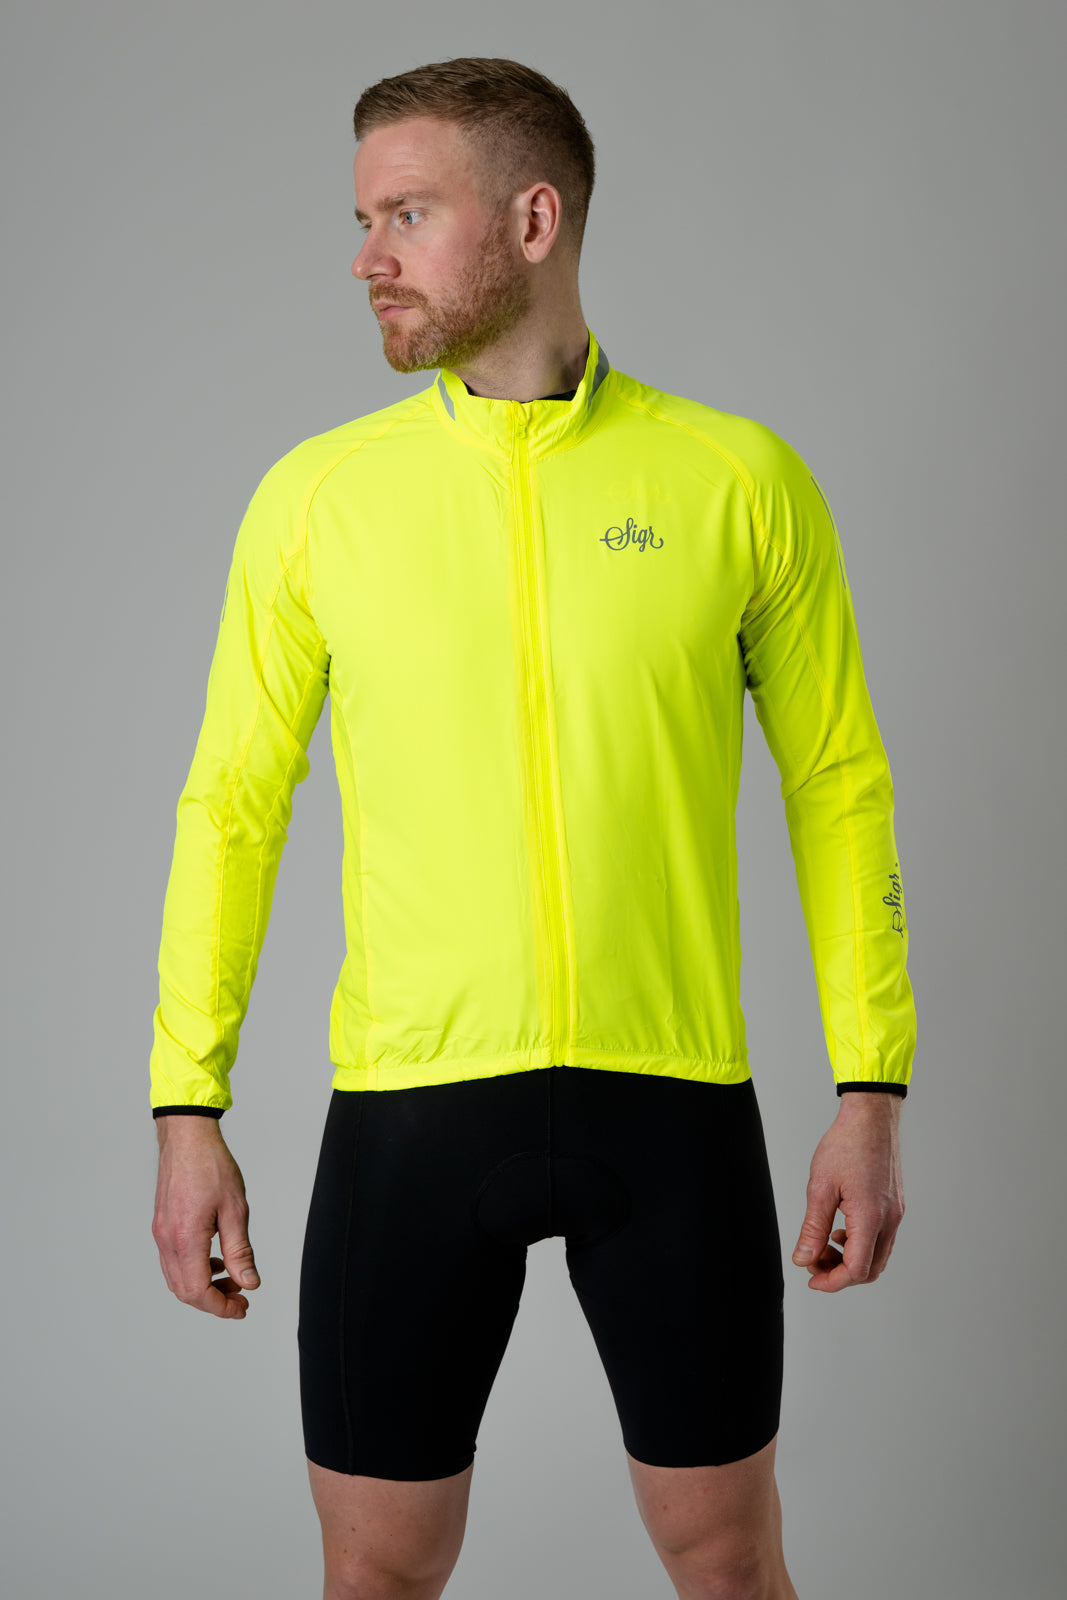 Treriksroset Yellow - Road Cycling Pack Jacket for Men